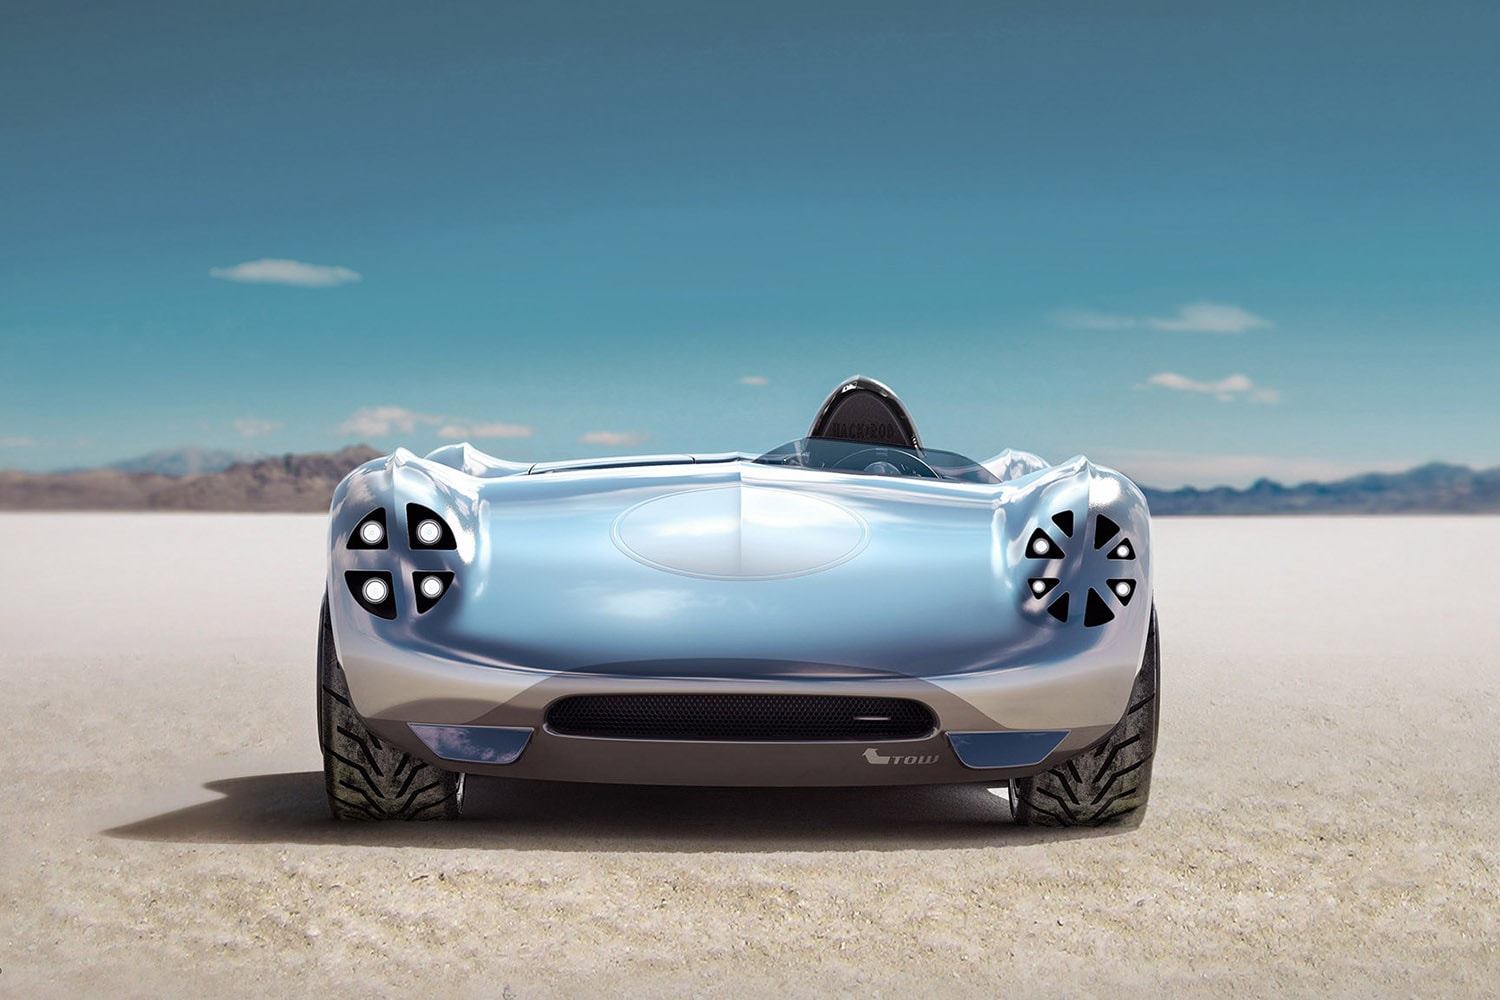 Hackrod Siemens Virtual Reality Designed 3D Printed Car video automotive vehicles